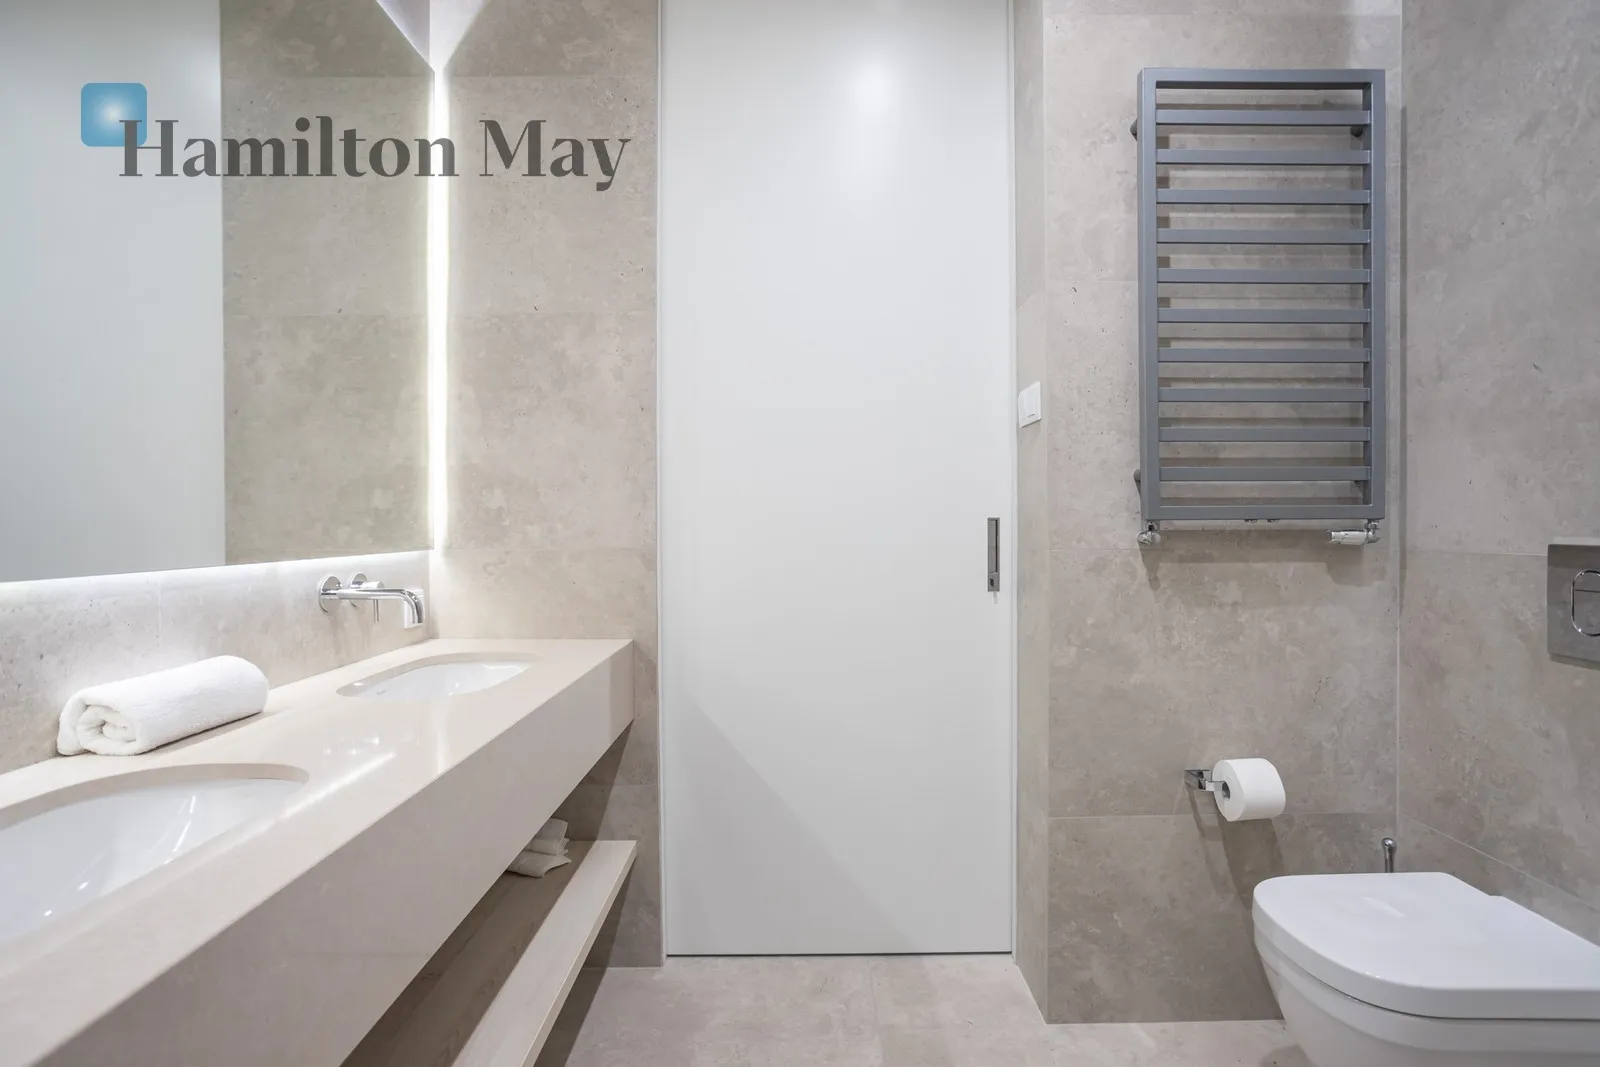 Level: 13 Price: 30000 PLN Bedrooms: 3 Bathrooms: 3 Size: 120m2 Price/m2: 250 PLN